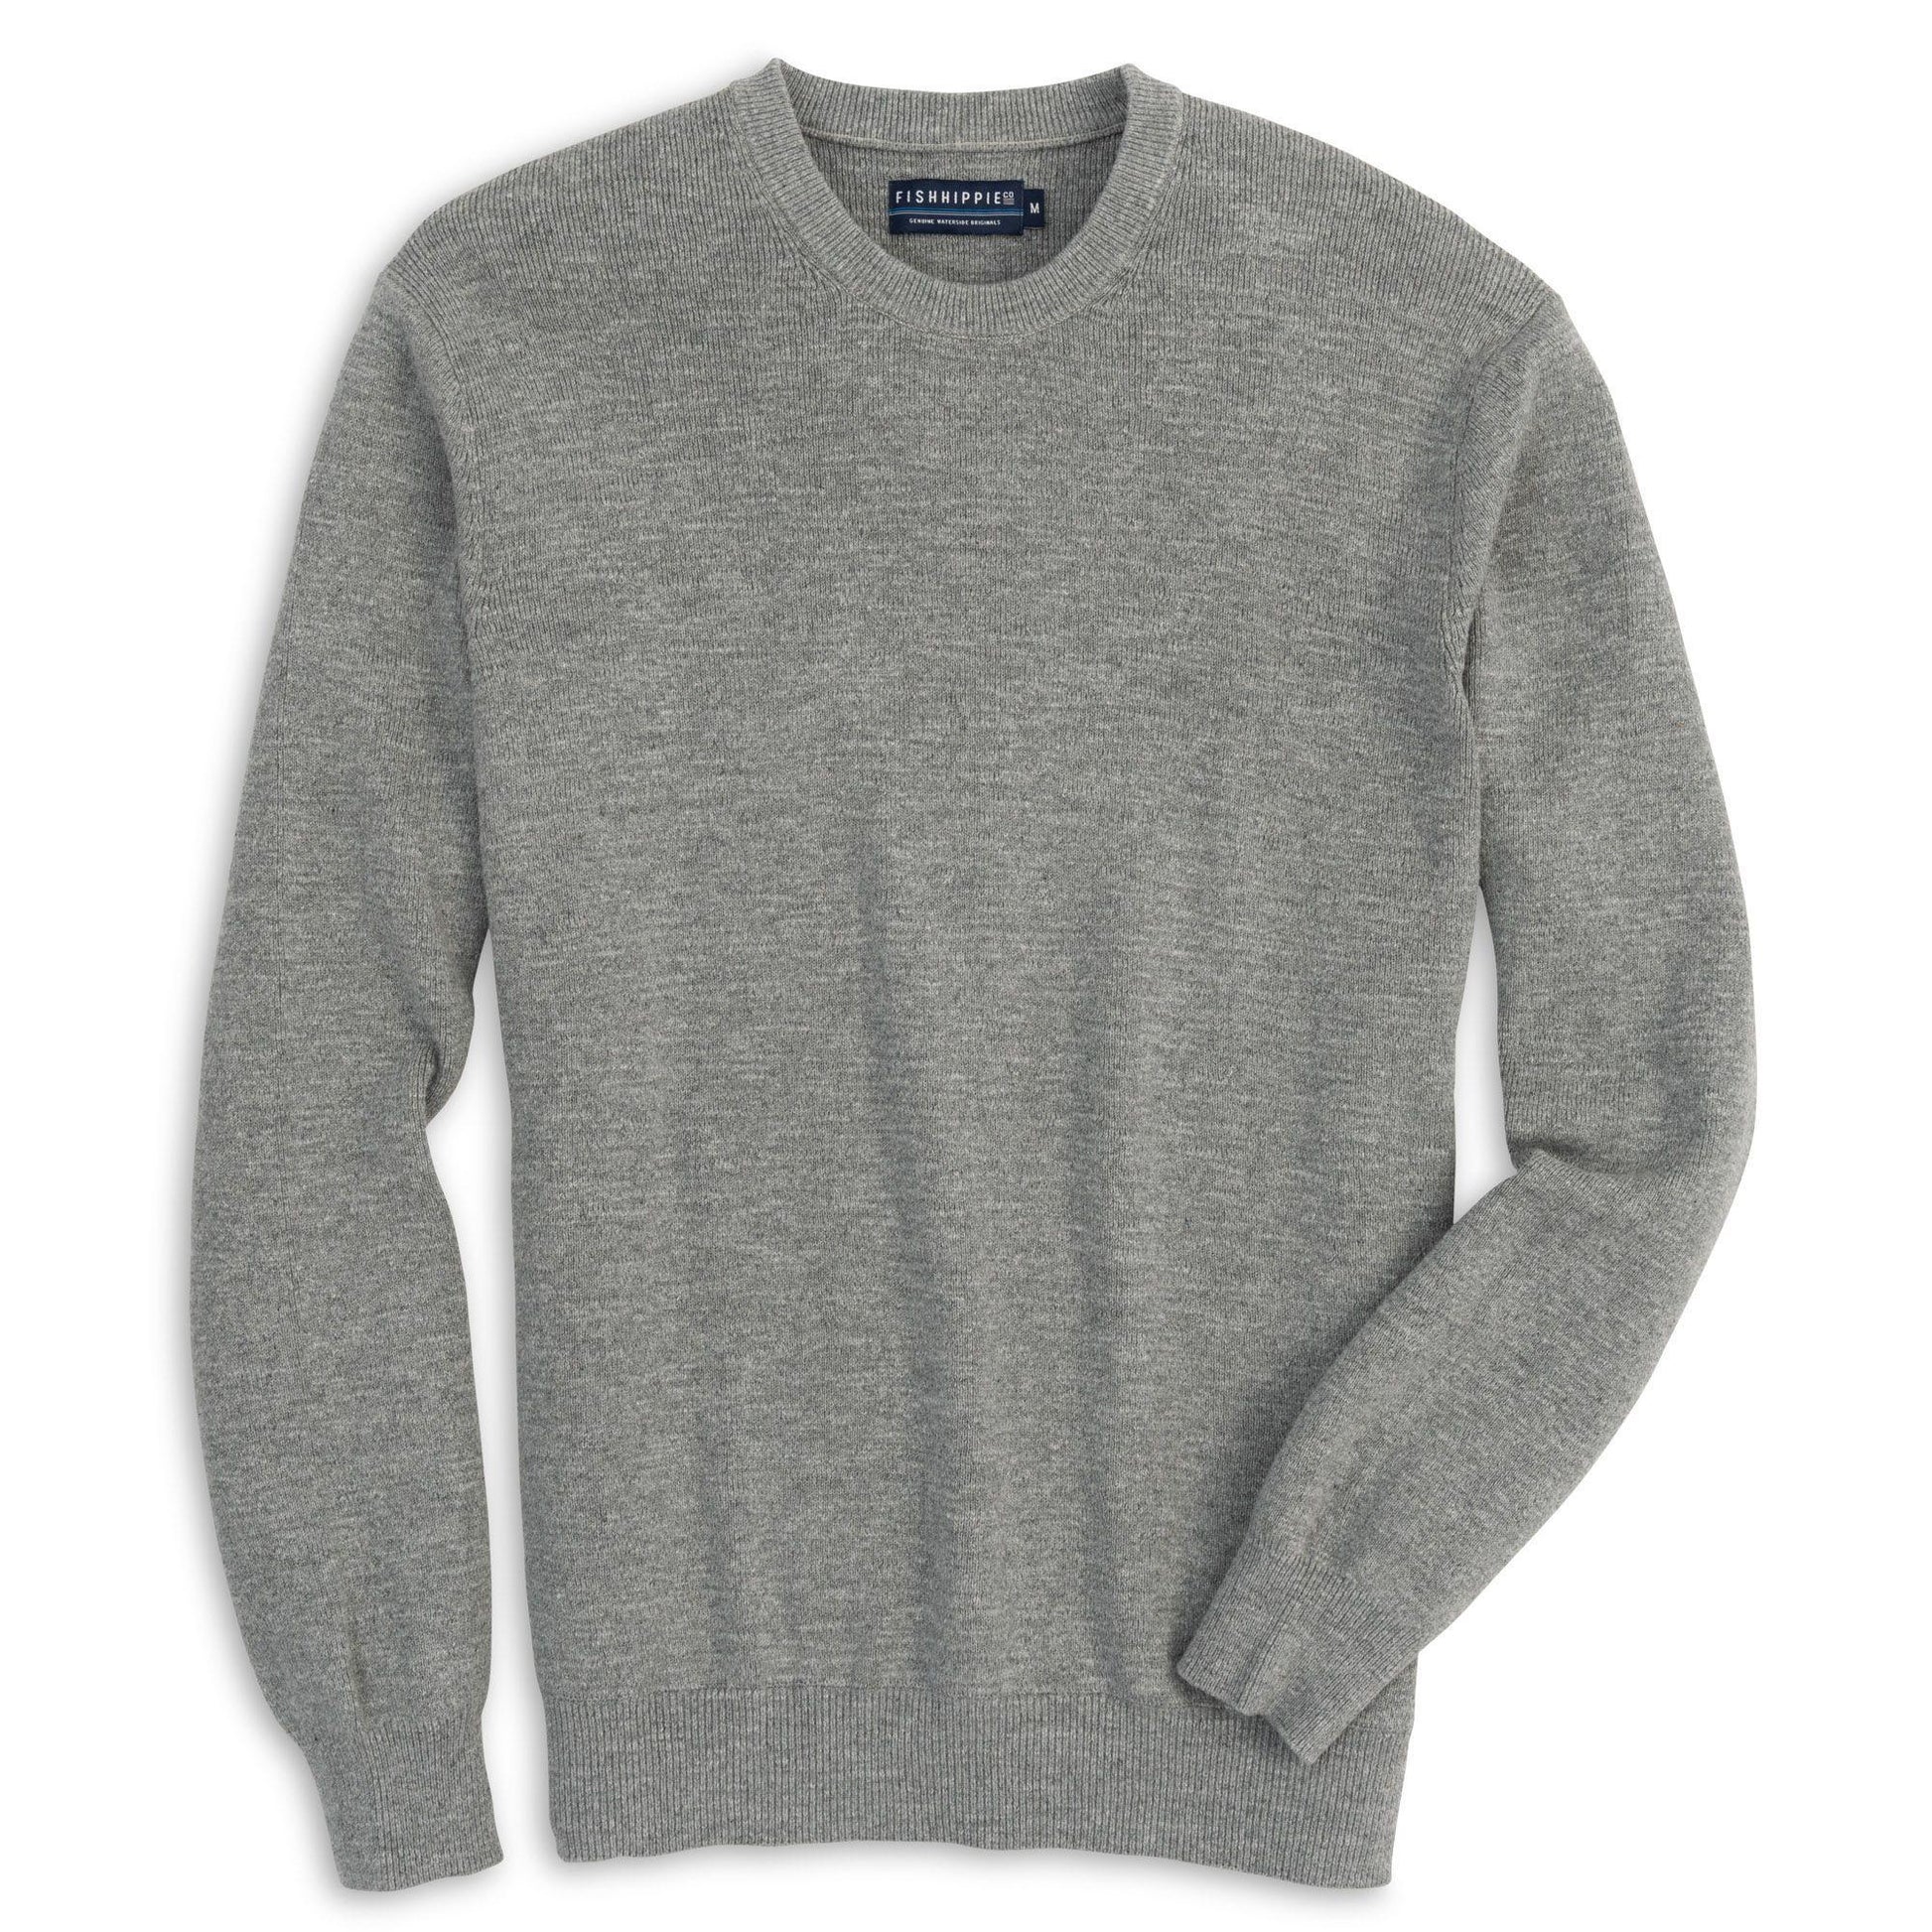 Rumford Crew Neck Cotton Sweater - Rivers & Glen Trading Co.